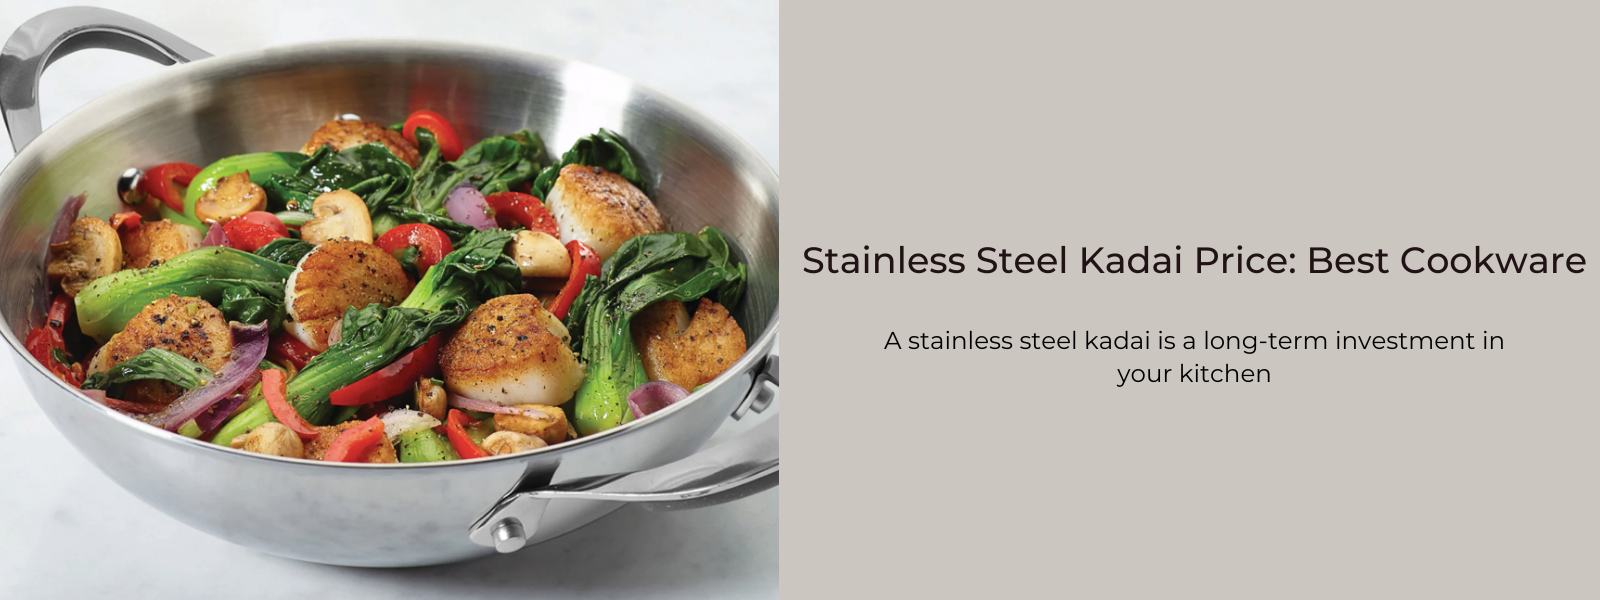 Stainless Steel Kadai Price: Buy Best Cookware